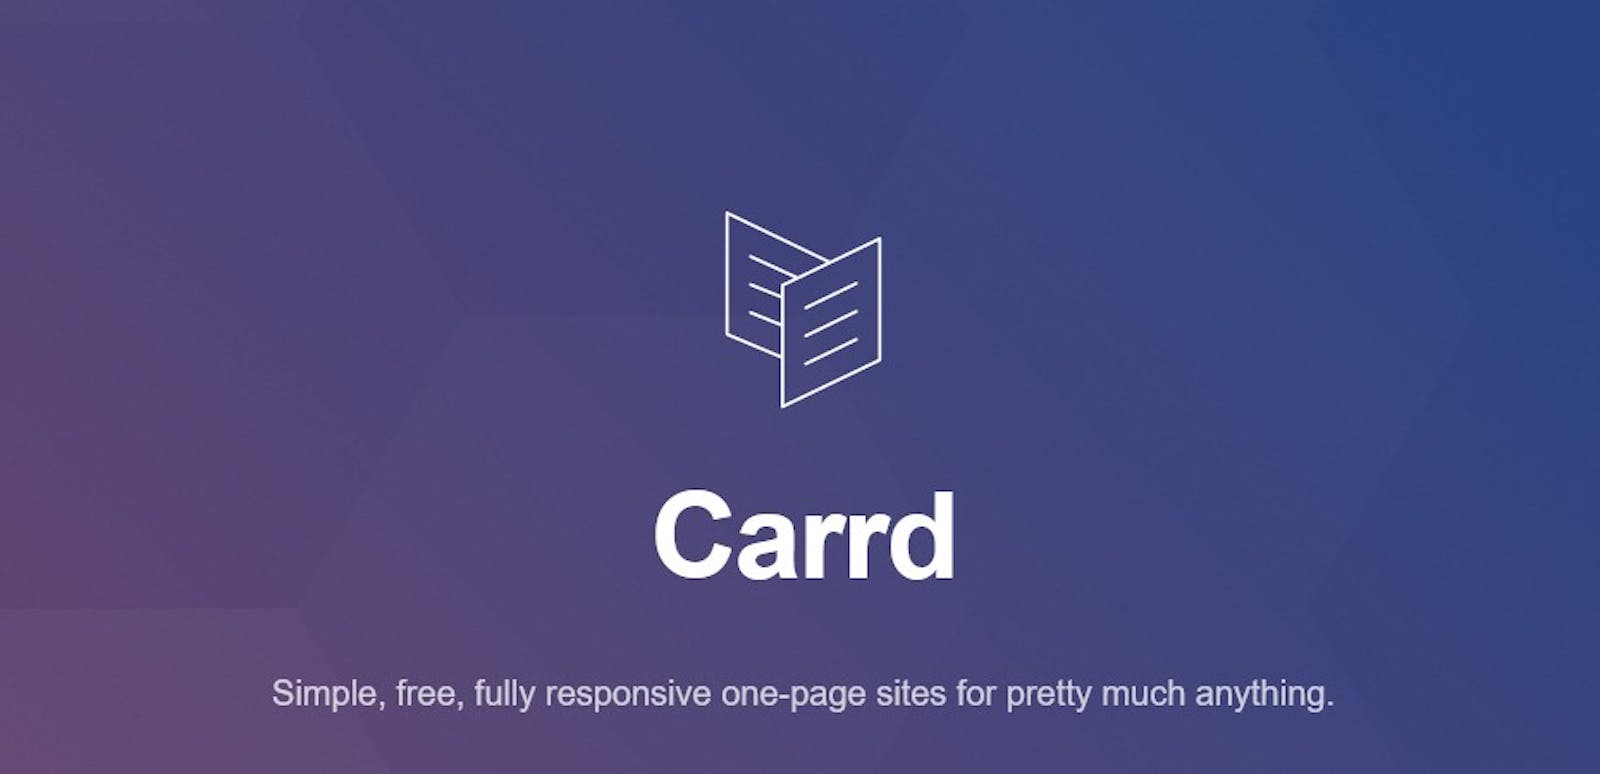 carrd - A Low Budget Landing Page Service